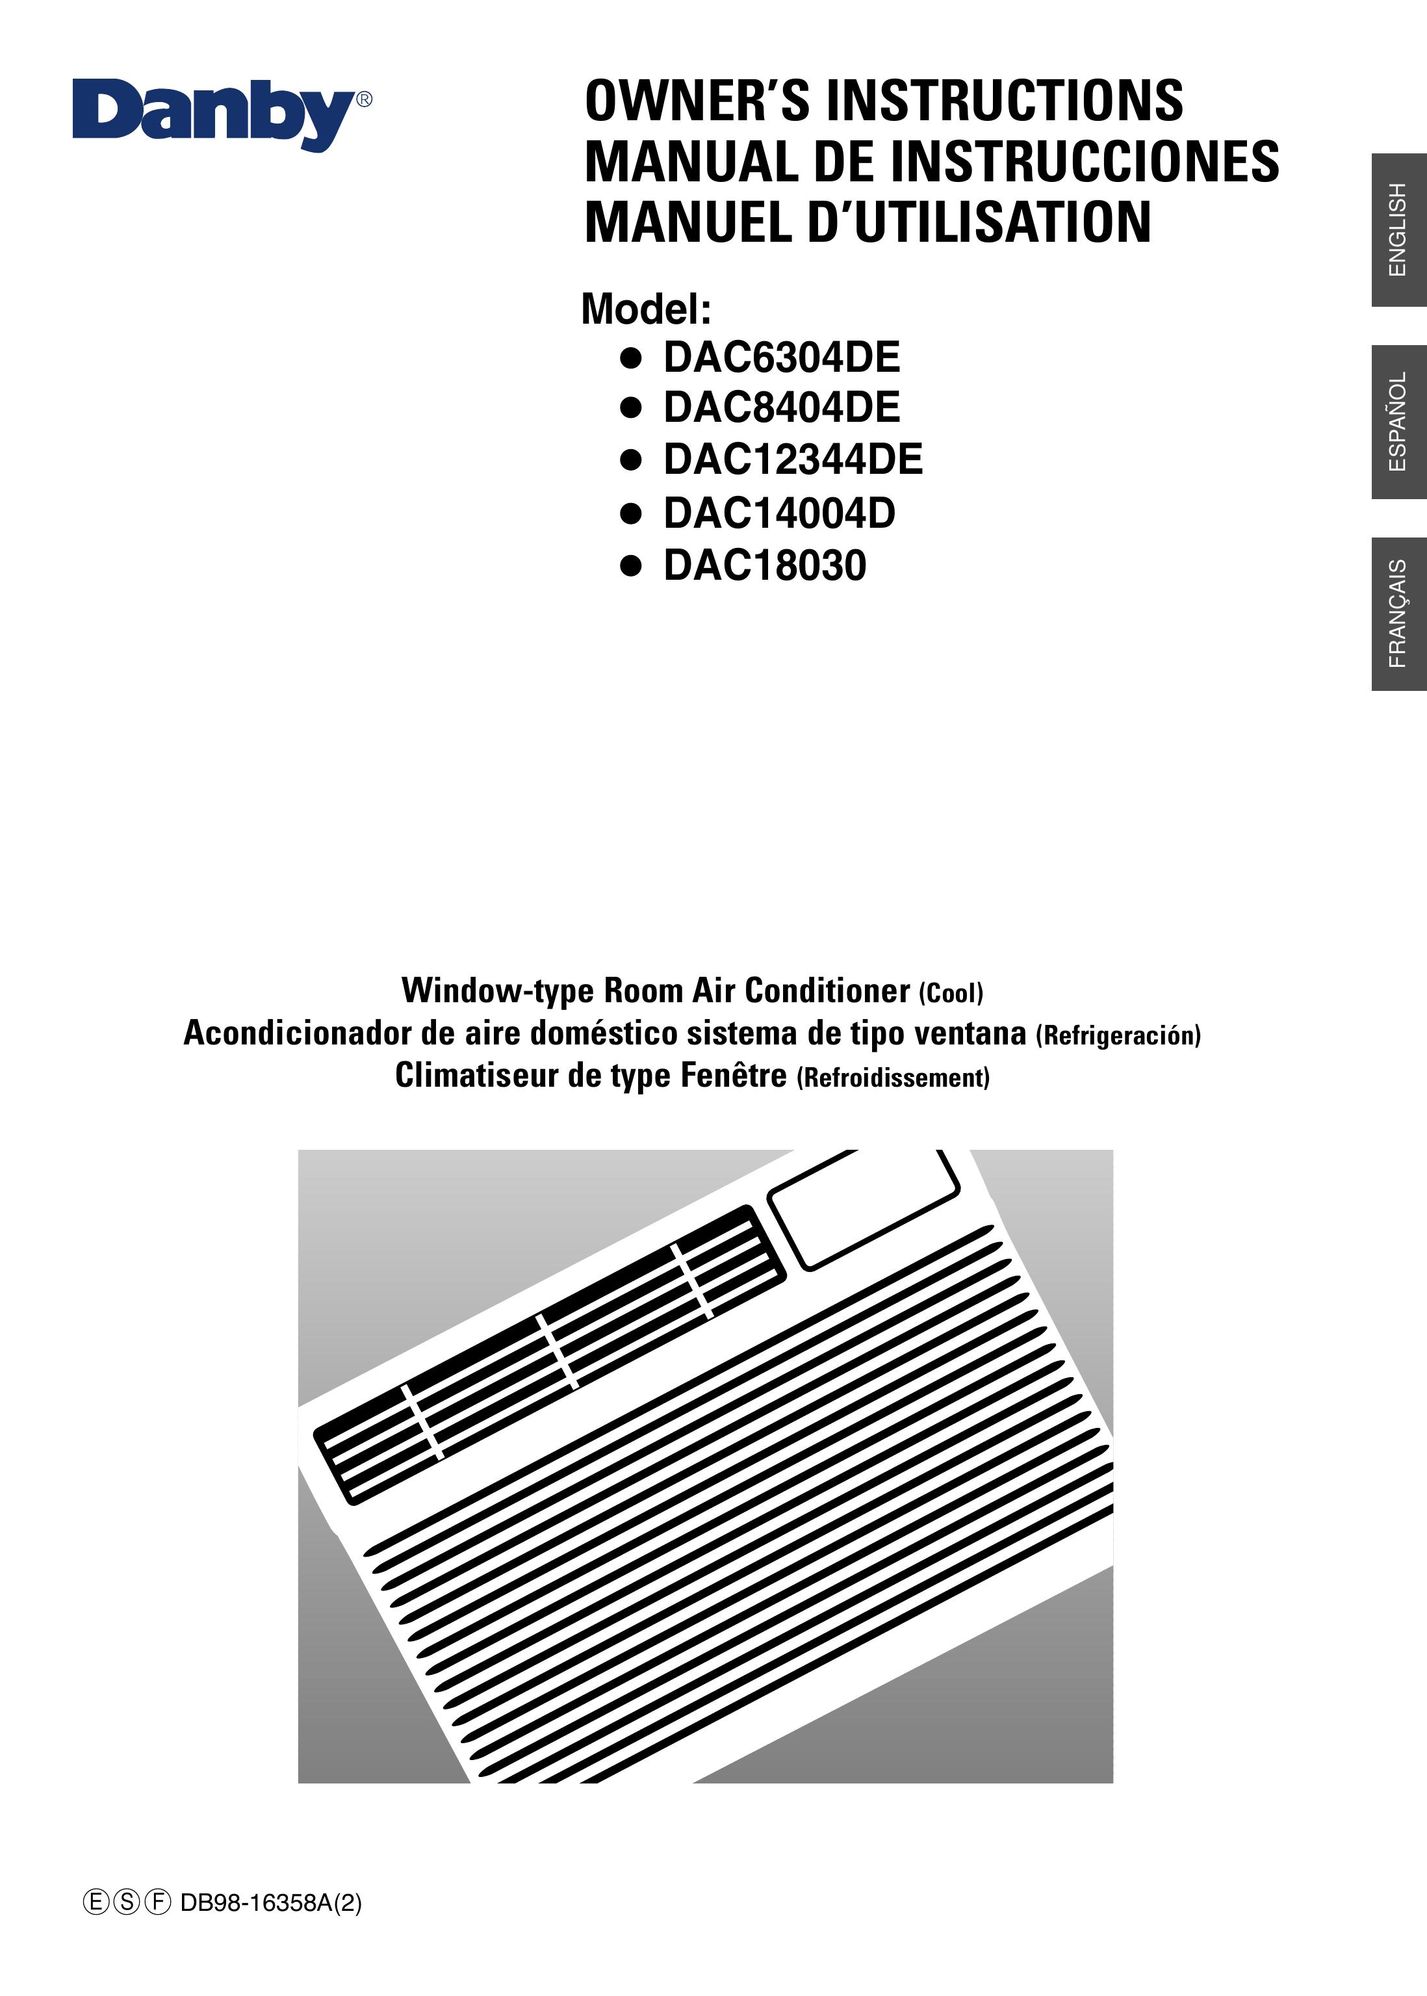 Danby DAC18030 Air Conditioner User Manual